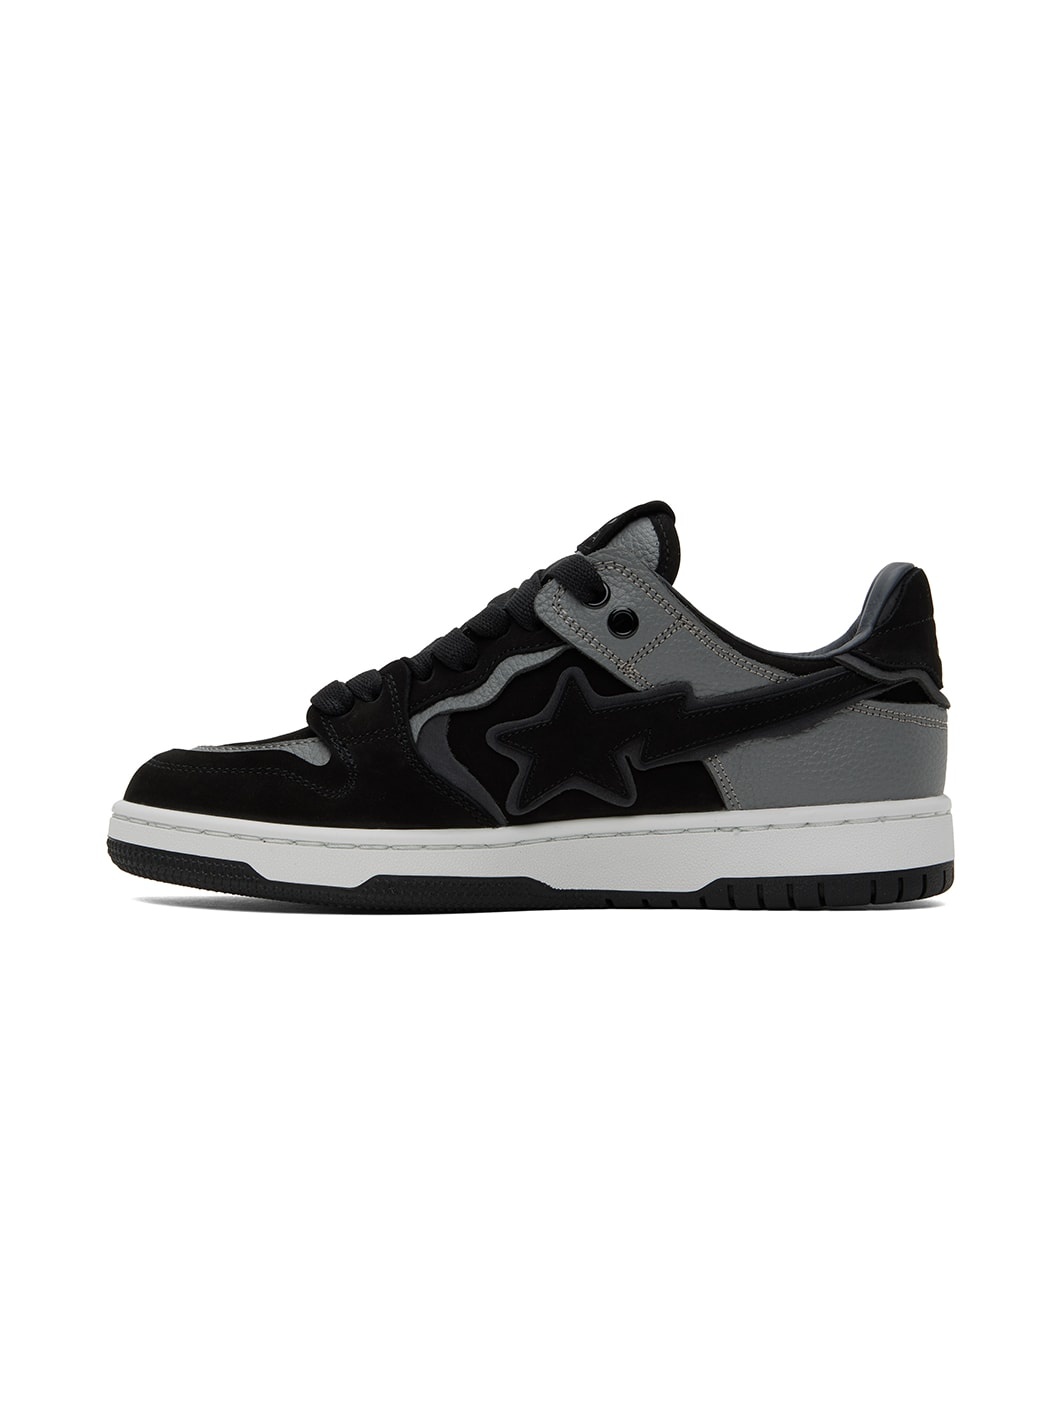 Black & Gray Sk8 Sta #6 M2 Sneakers - 3